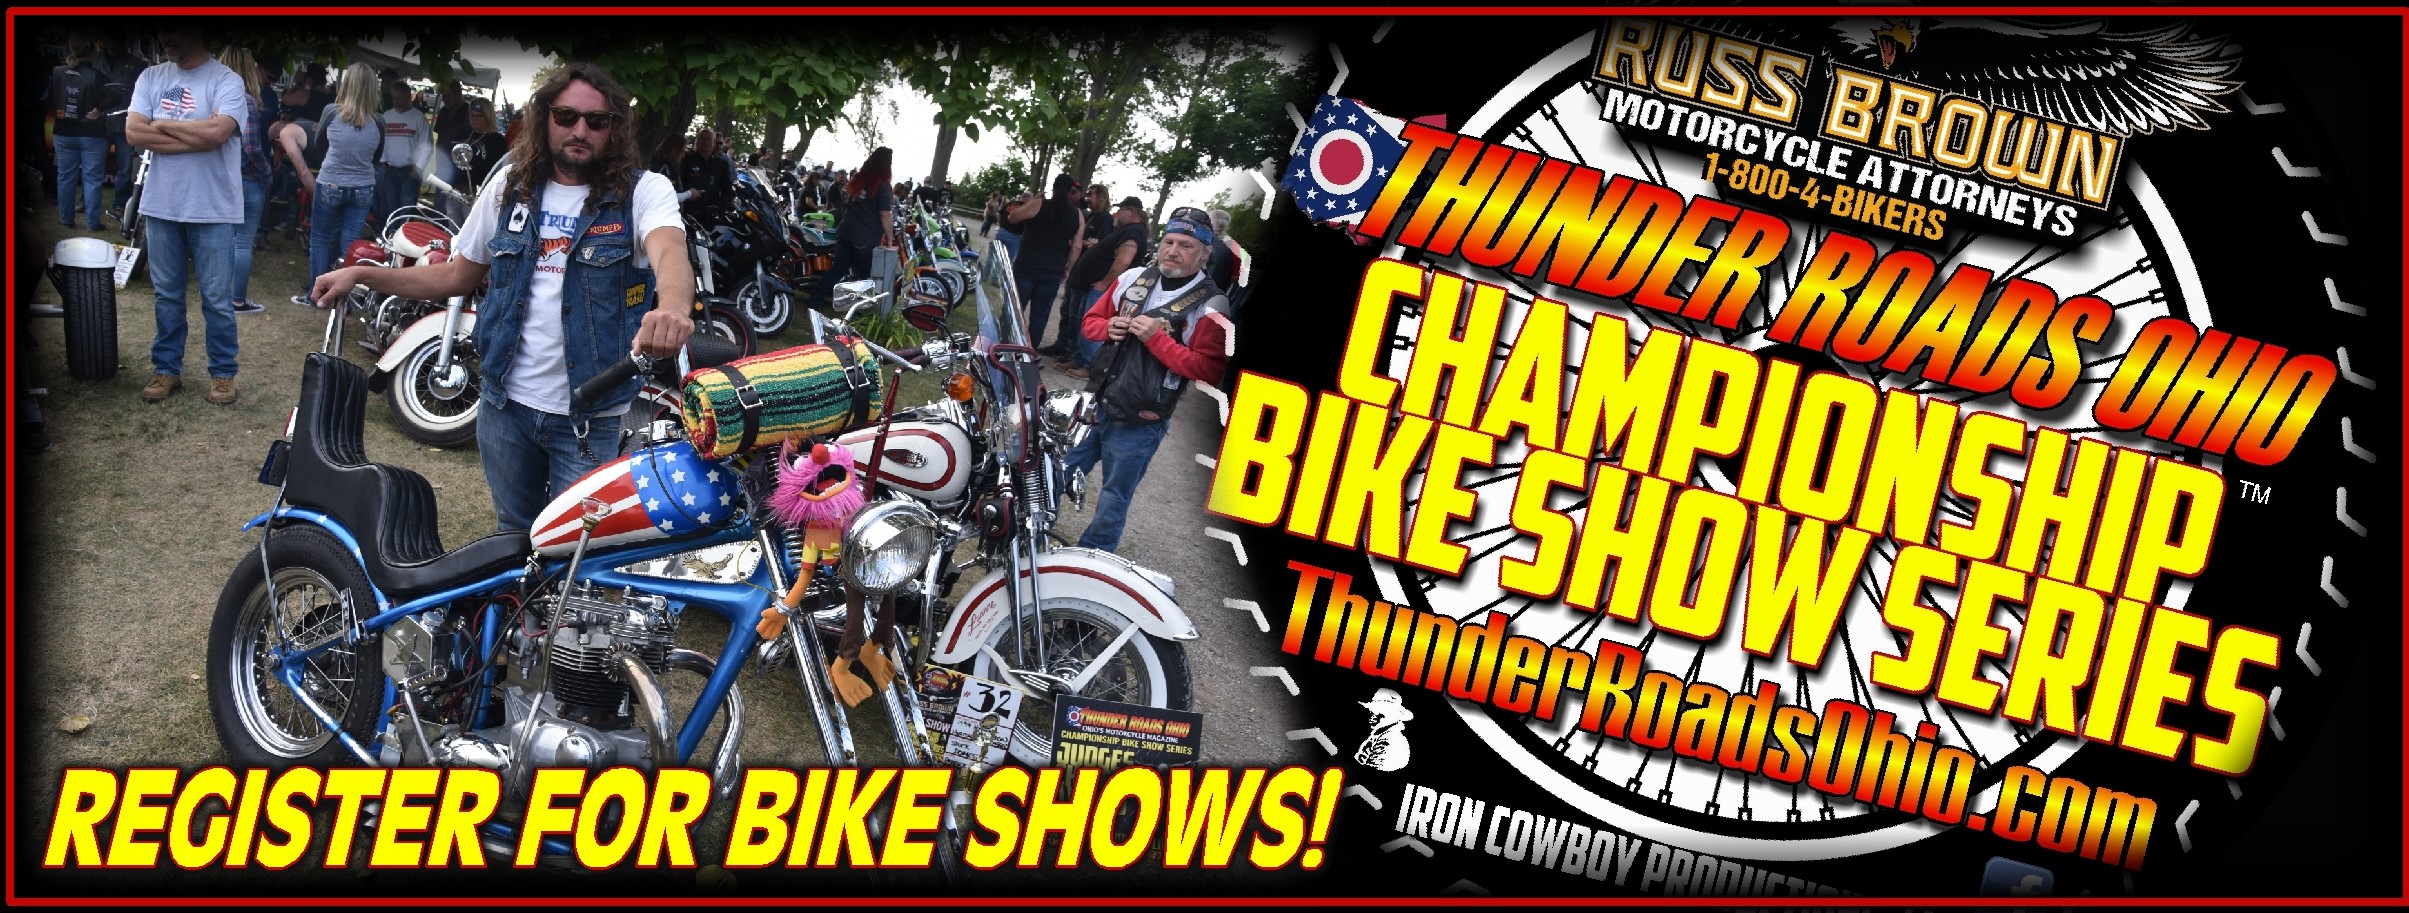 TRO Championship Bike Show Series